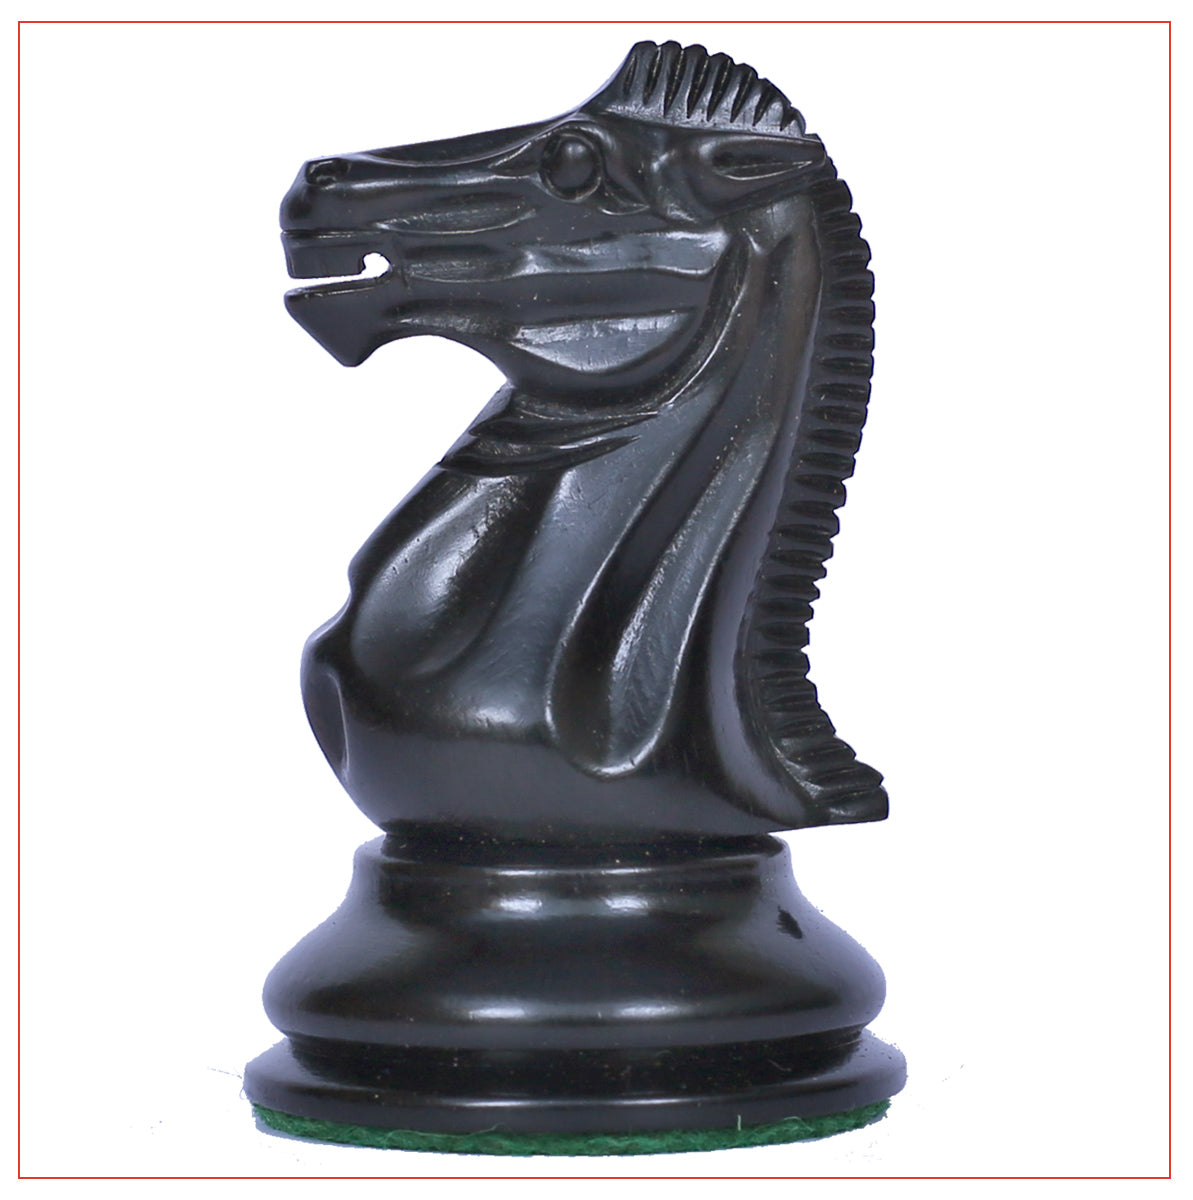 3 1/2 Standard Staunton chess Pieces #5 – Chess House